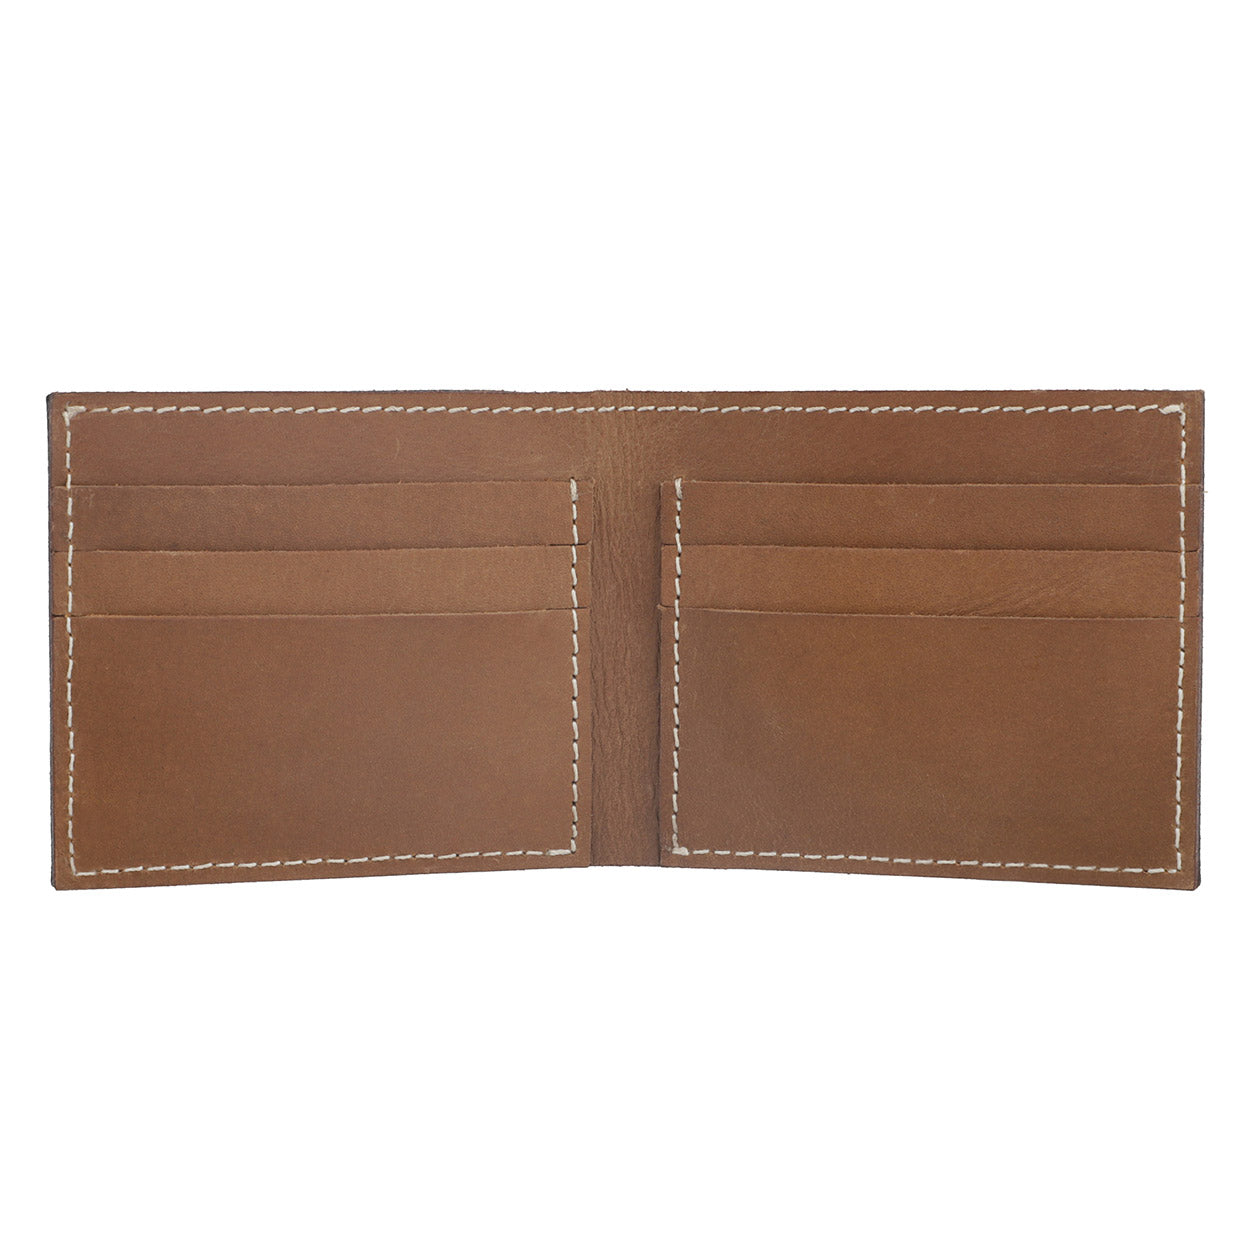 Making the Classic Bi-Fold Wallet KIT, wallet